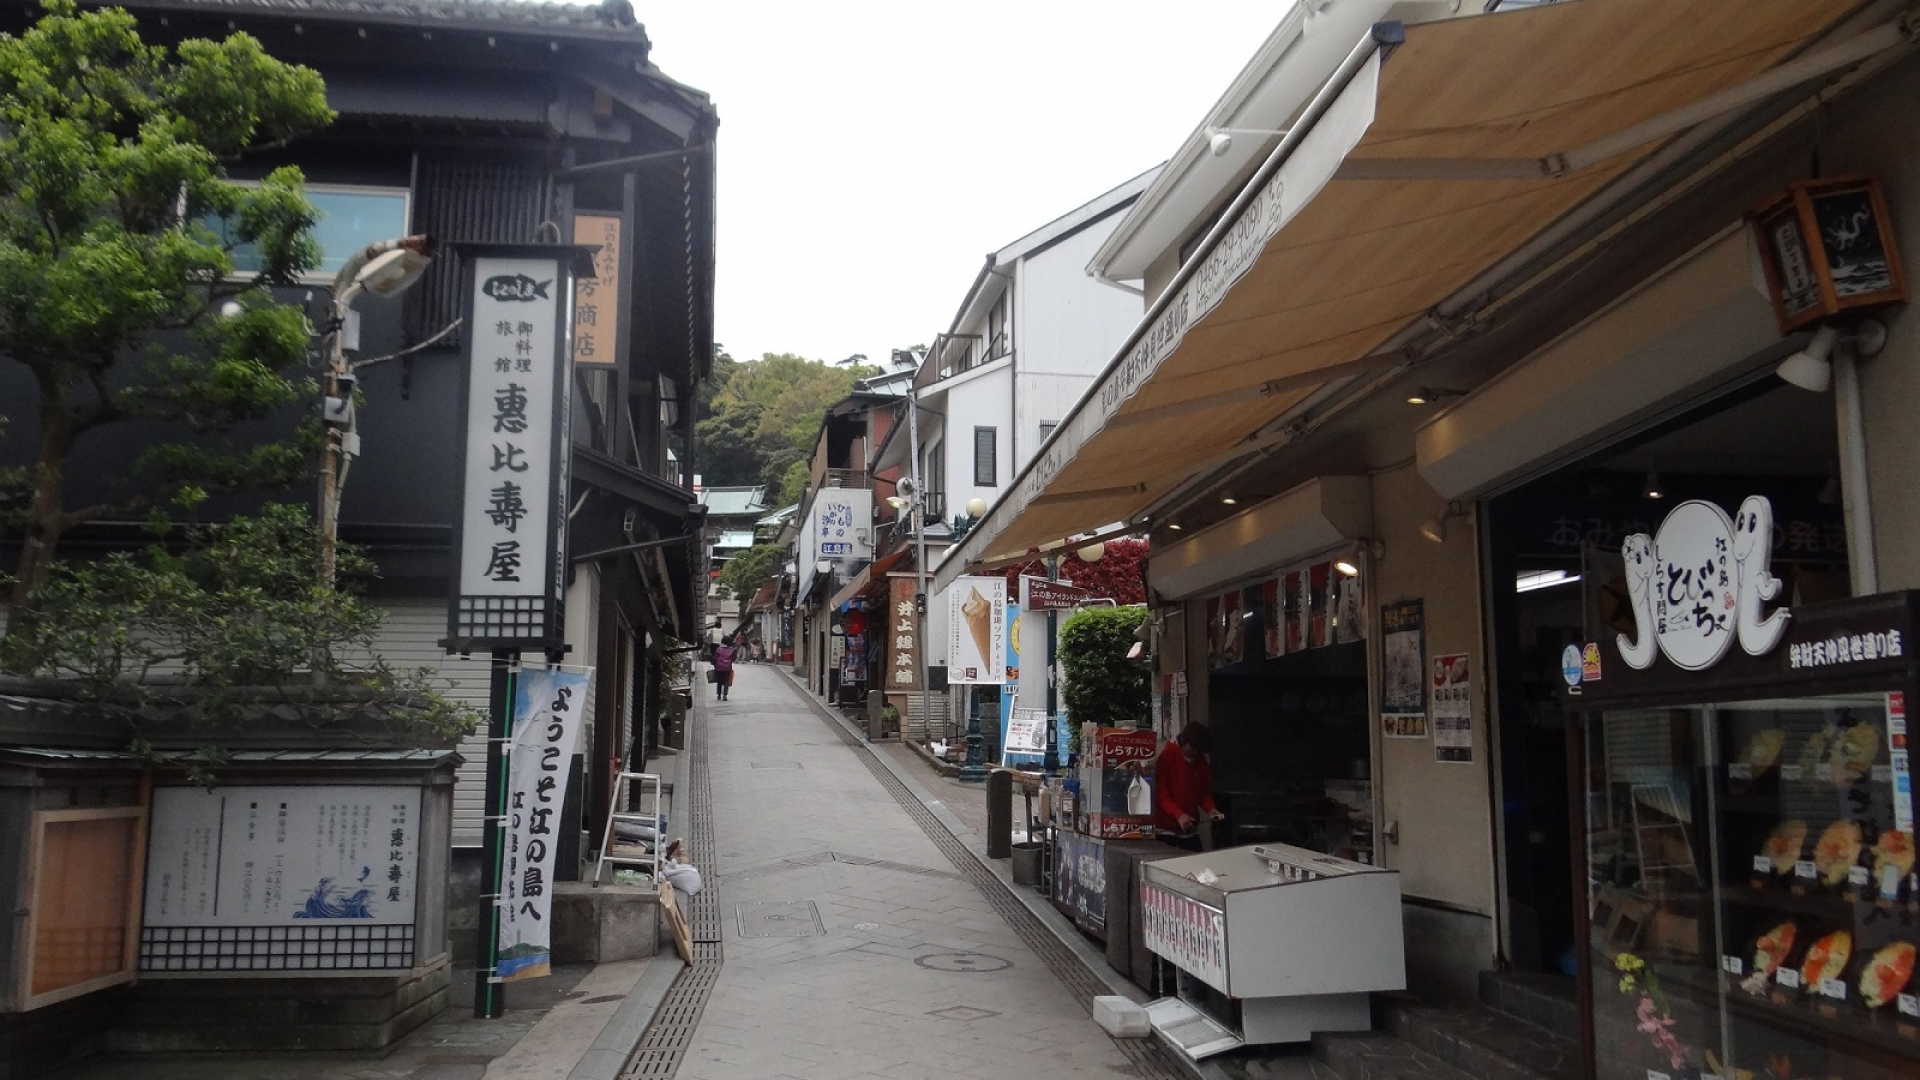 Enoshima Benzaiten Nakamise Street